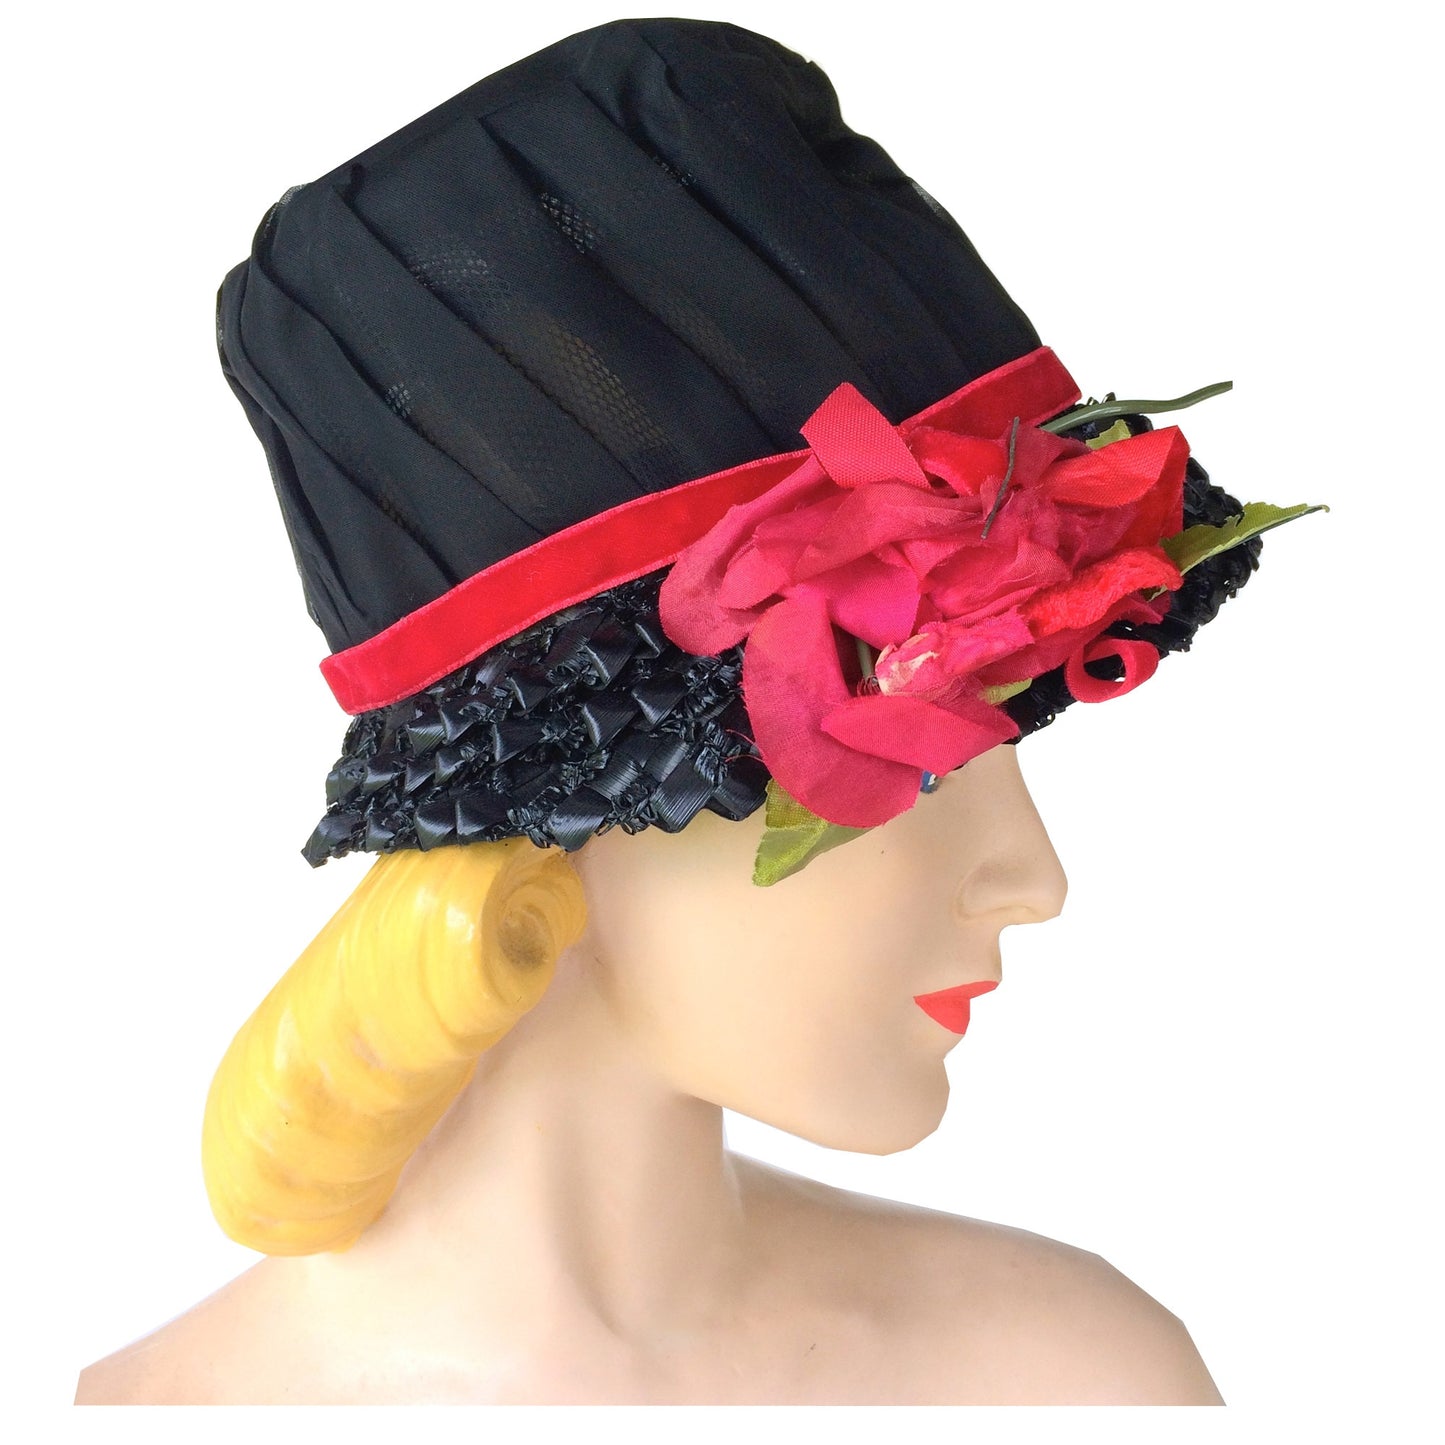 Sheer Saucy Black Sheer Chiffon Bucket Hat w/ Red Rose and Velvet circa 1960s